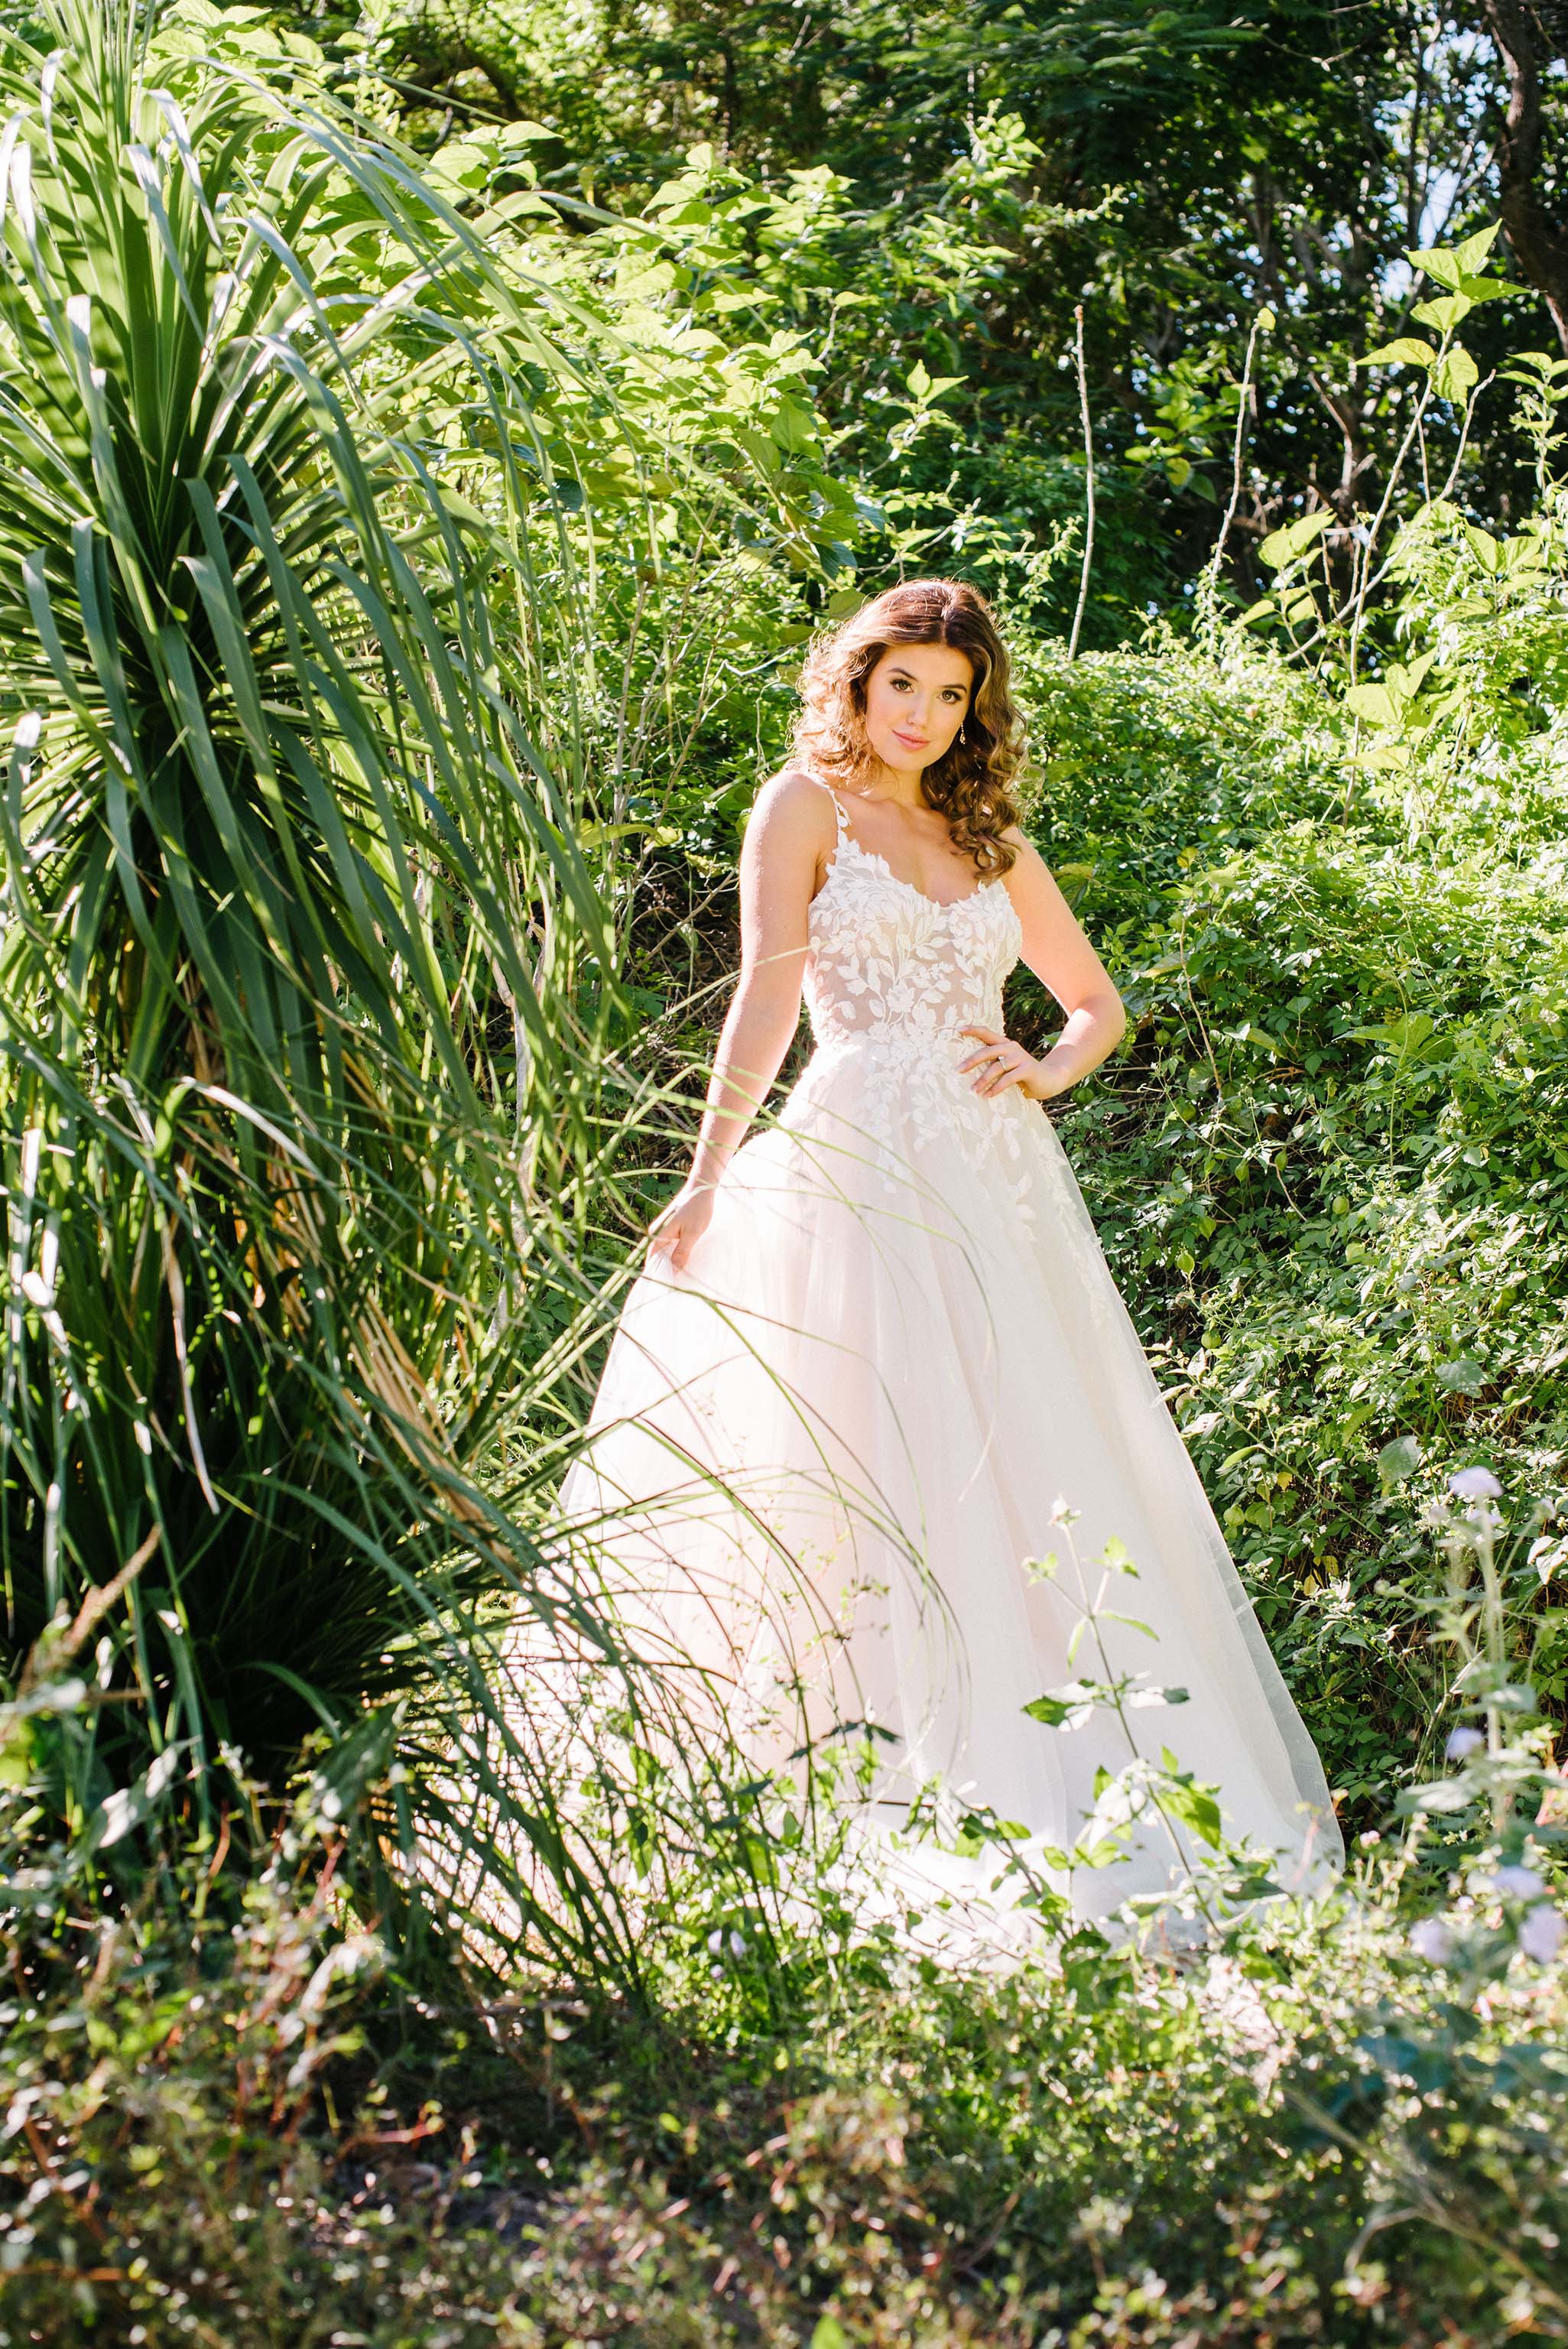 lace wedding dress on bride standing in green garden